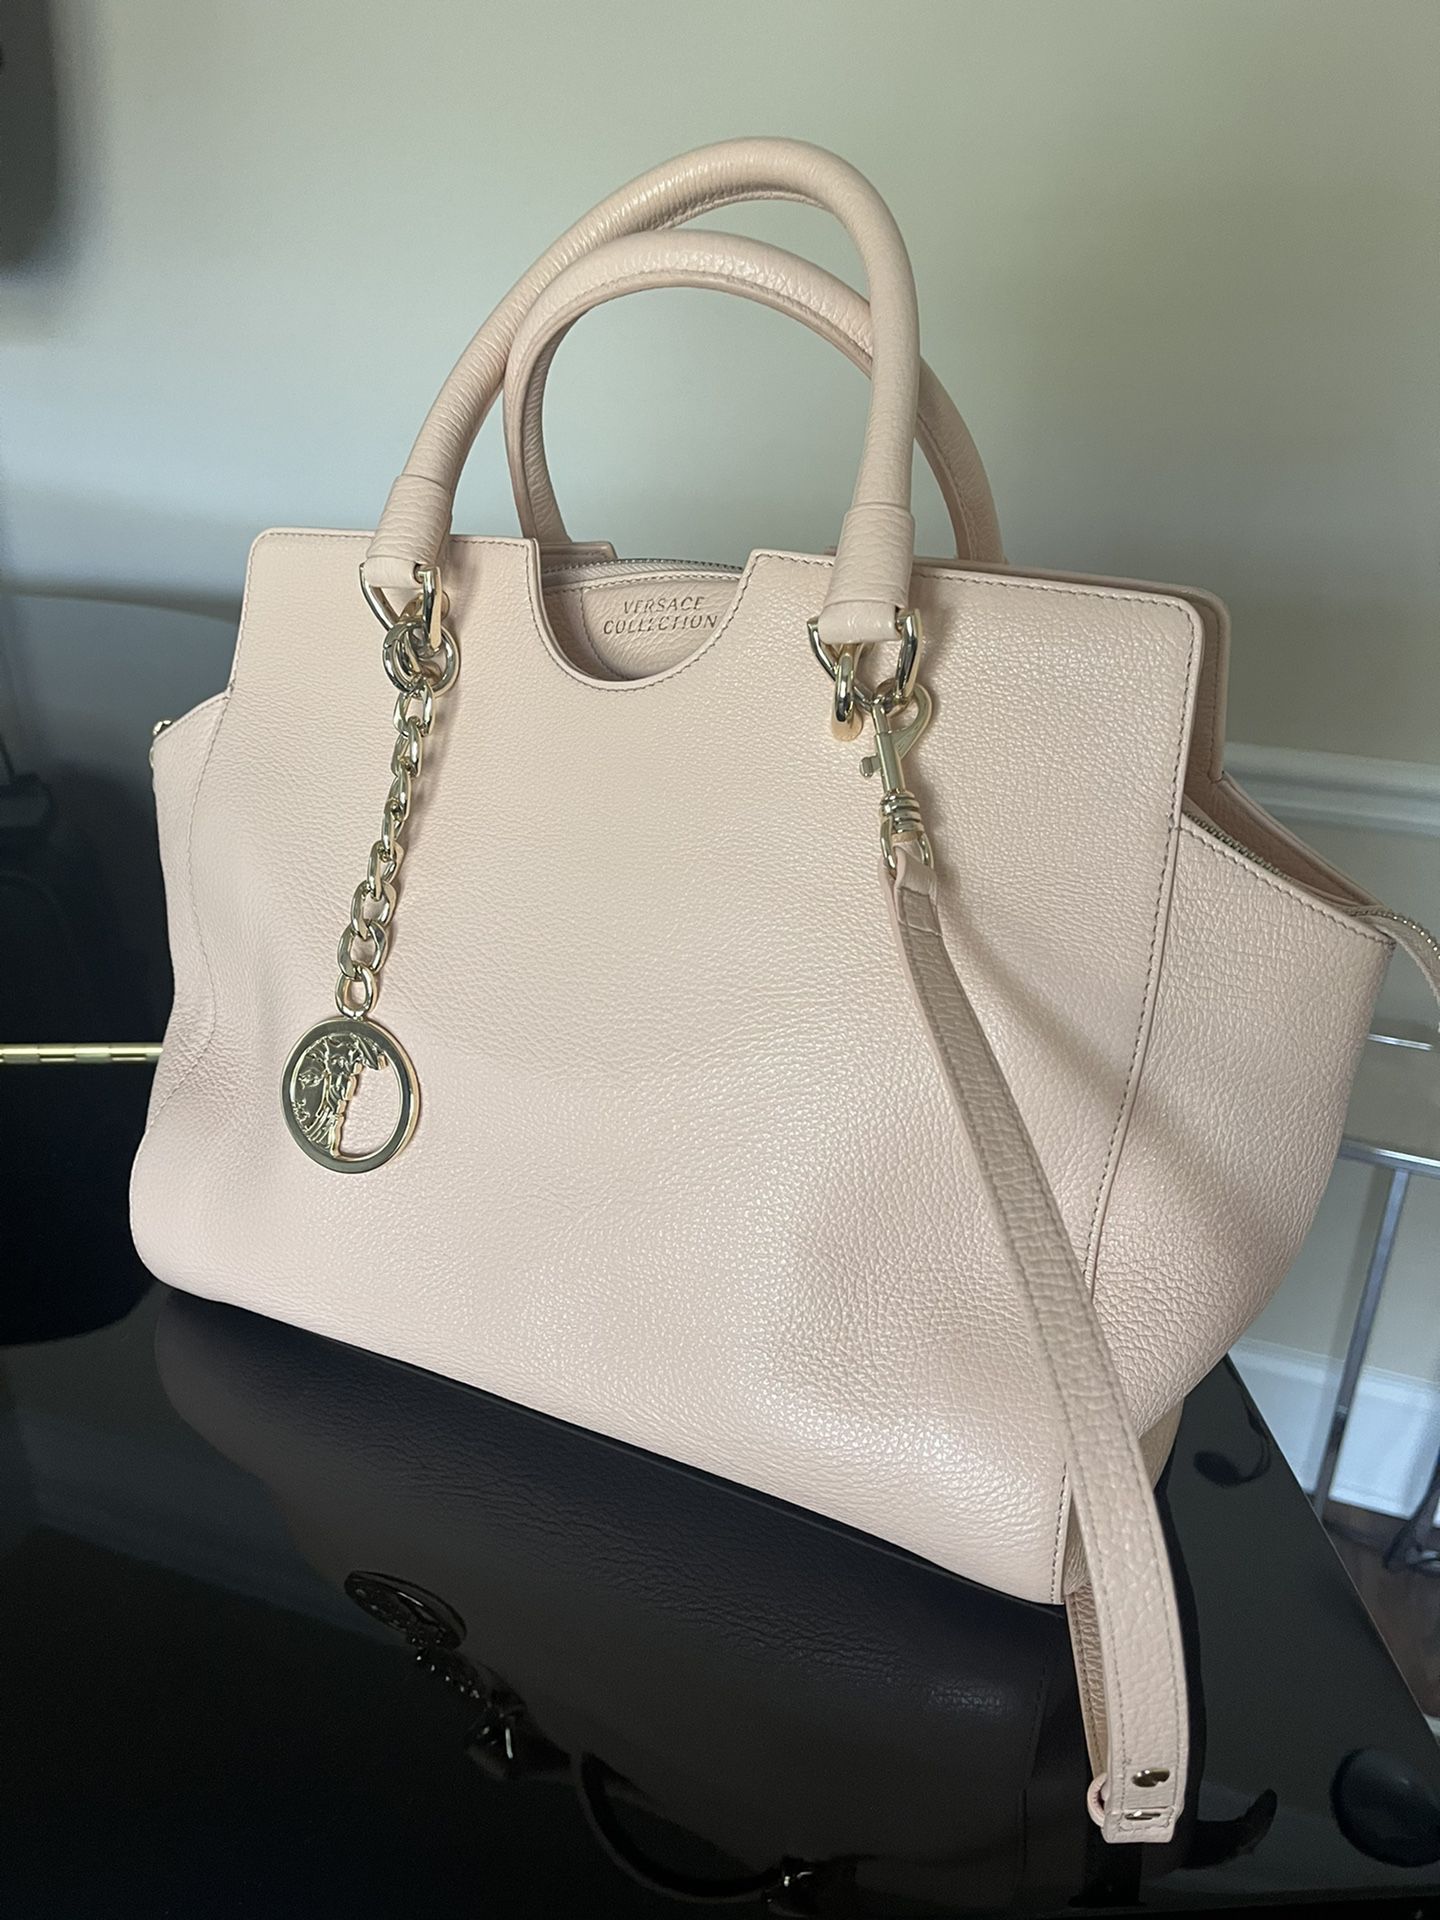 Versace Authentic handbag 